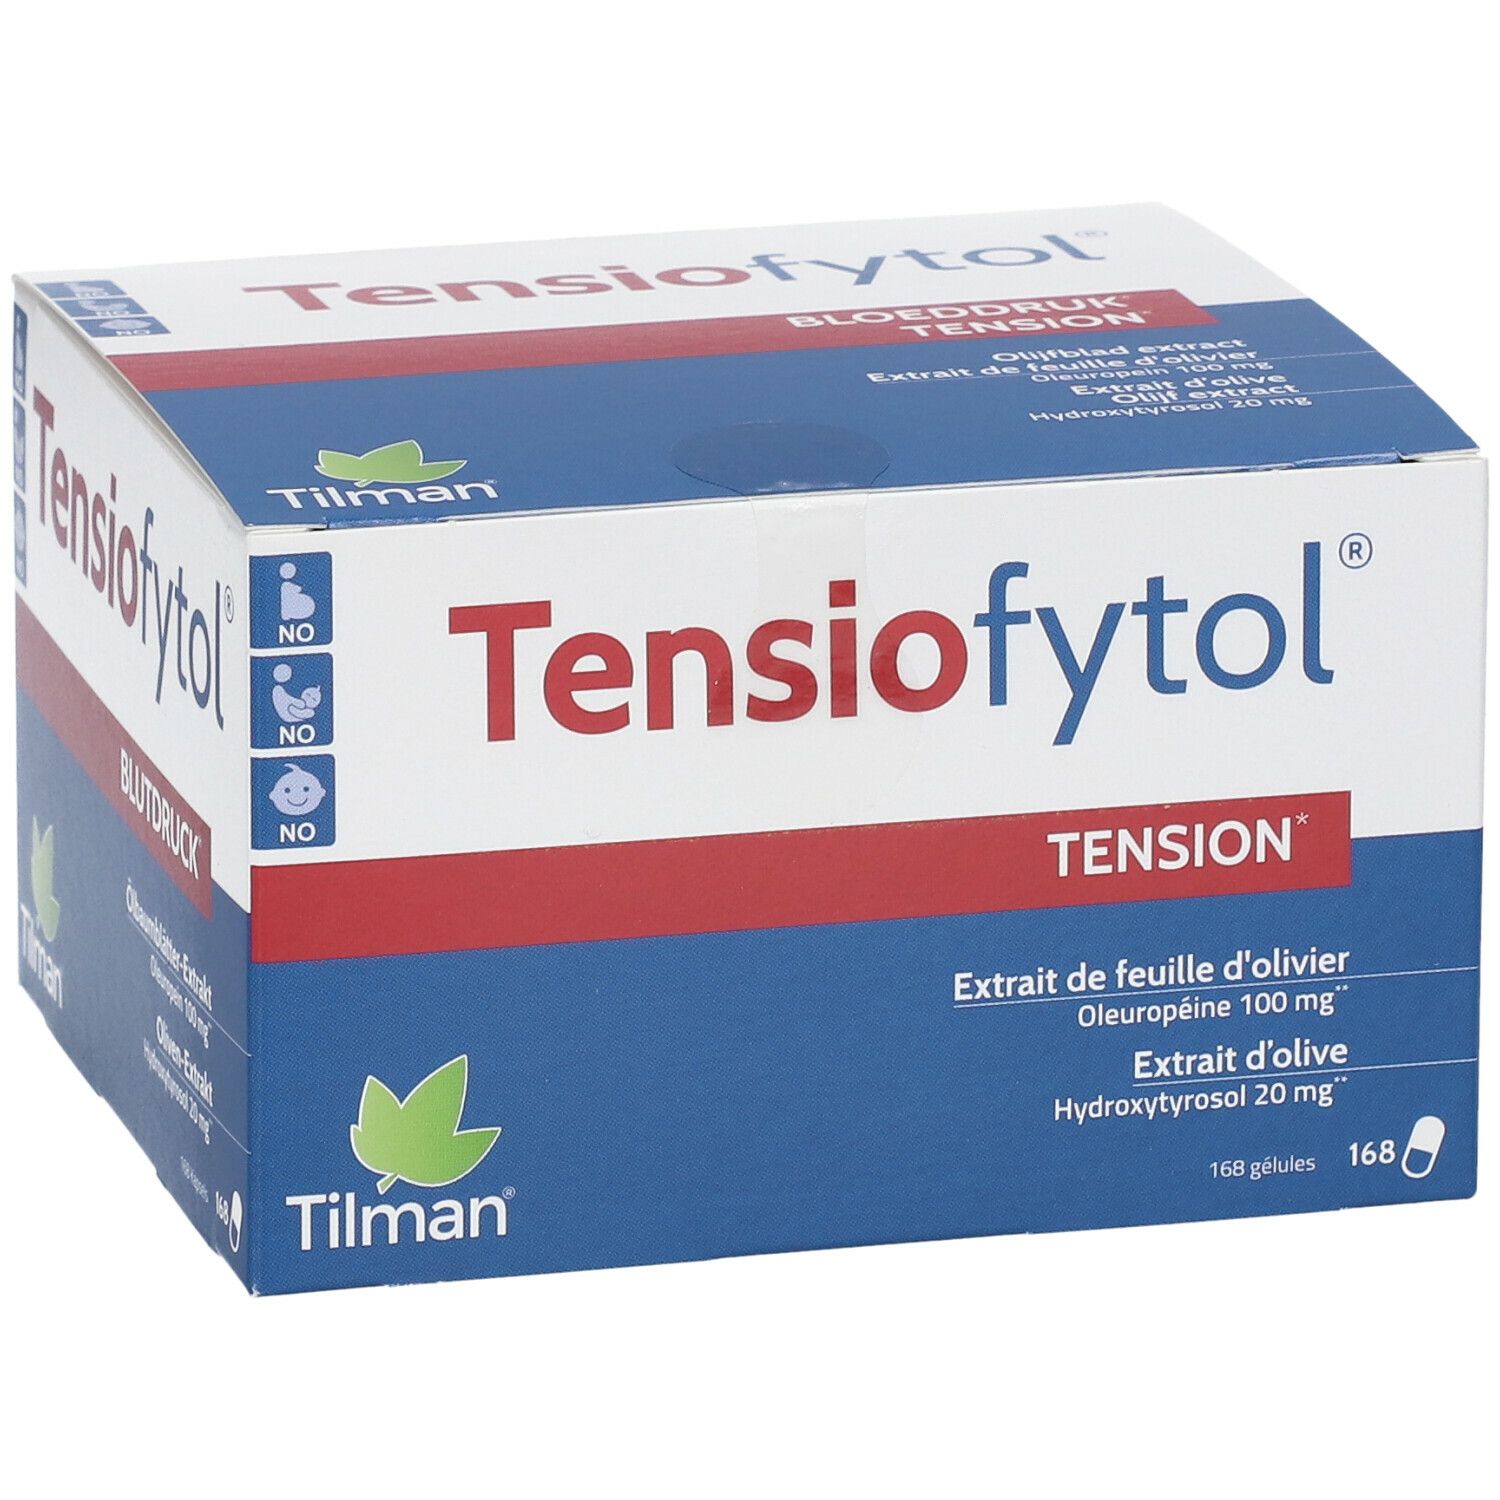 Tilman® Tensiofytol®